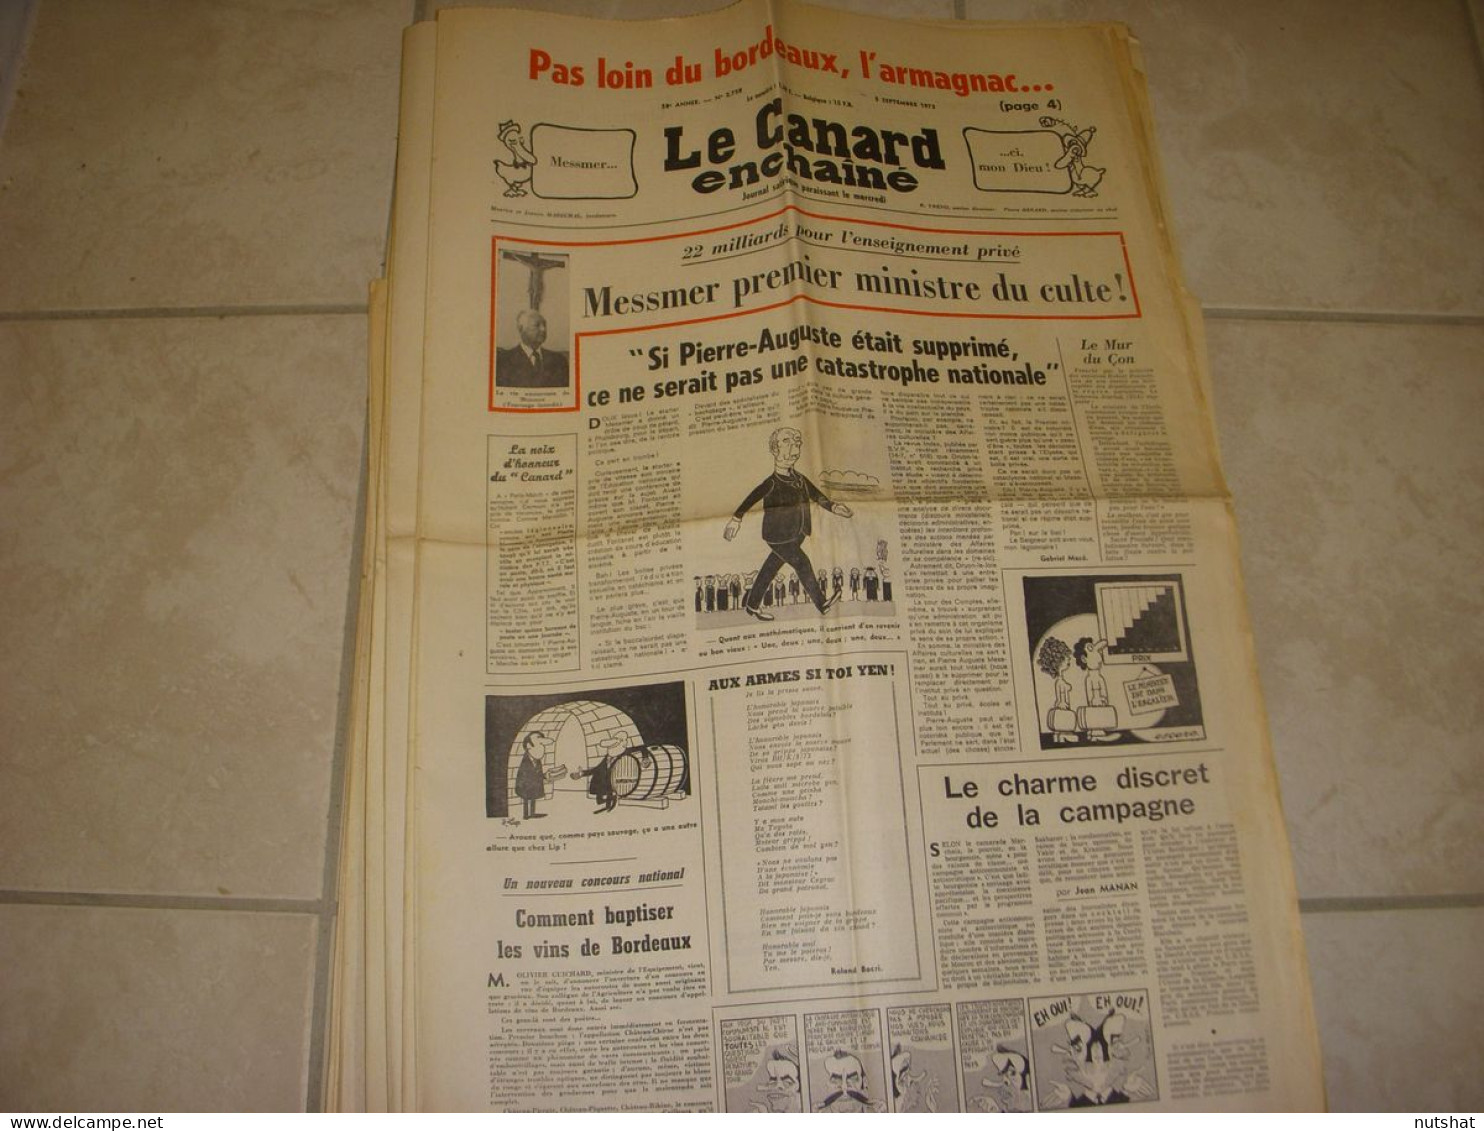 CANARD ENCHAINE 2758 05.09.1973 Le MLF Michel POLAC Benigno CACERES Guy LUX - Politica